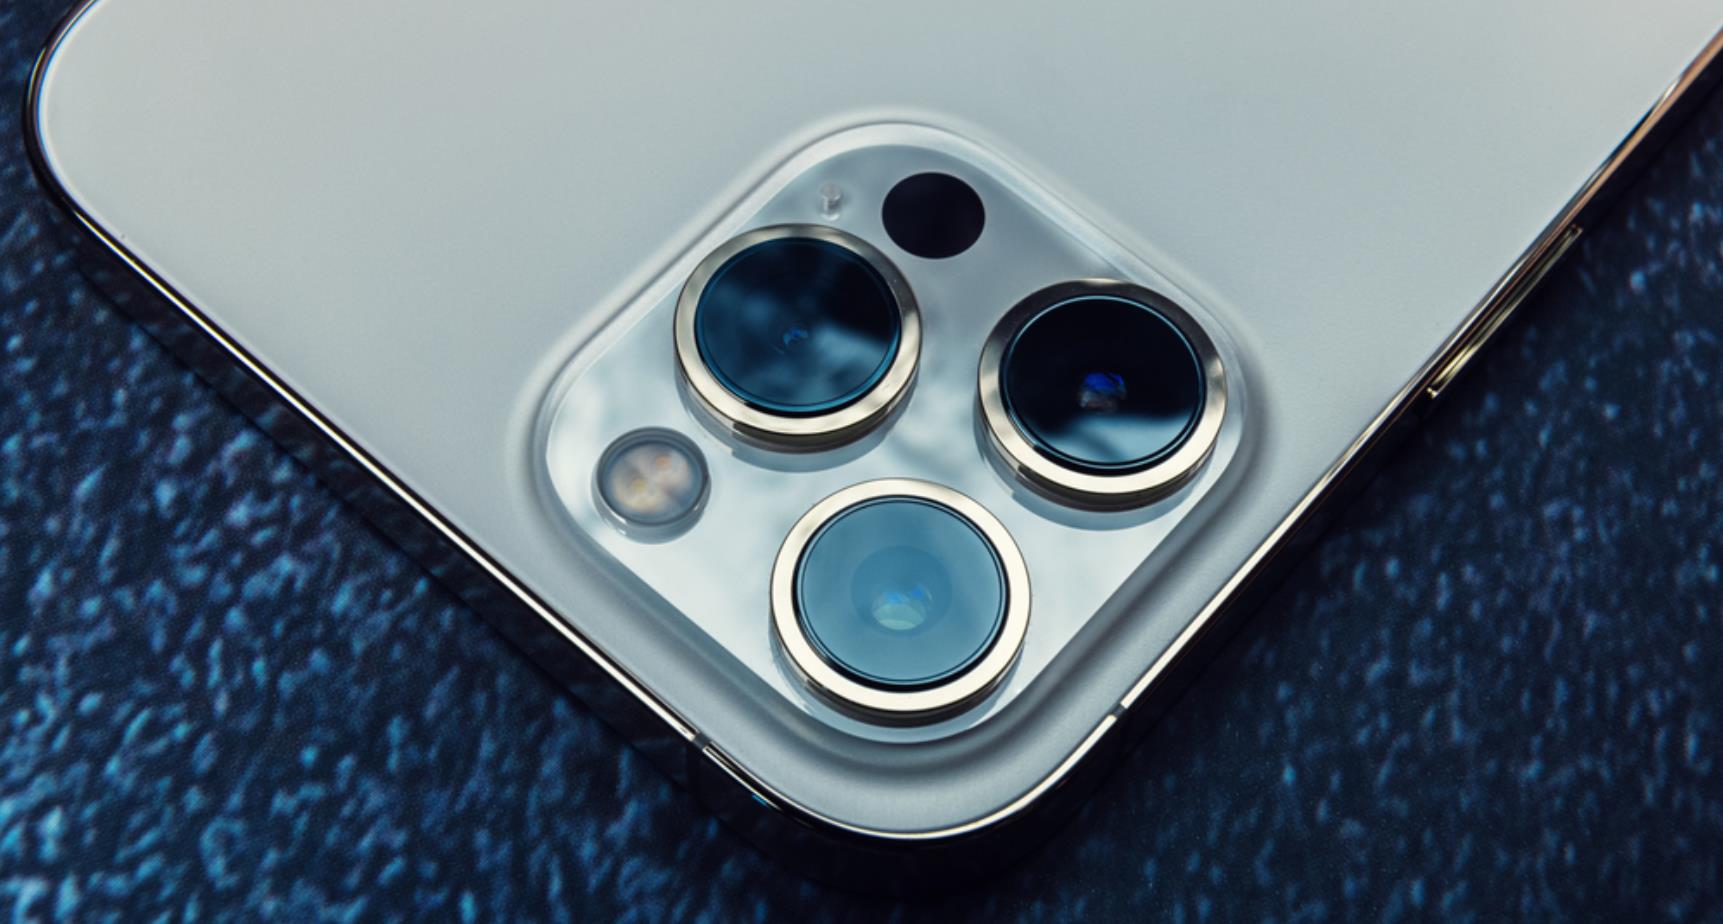 Should I protect my iPhone 13 Pro Max camera lens?